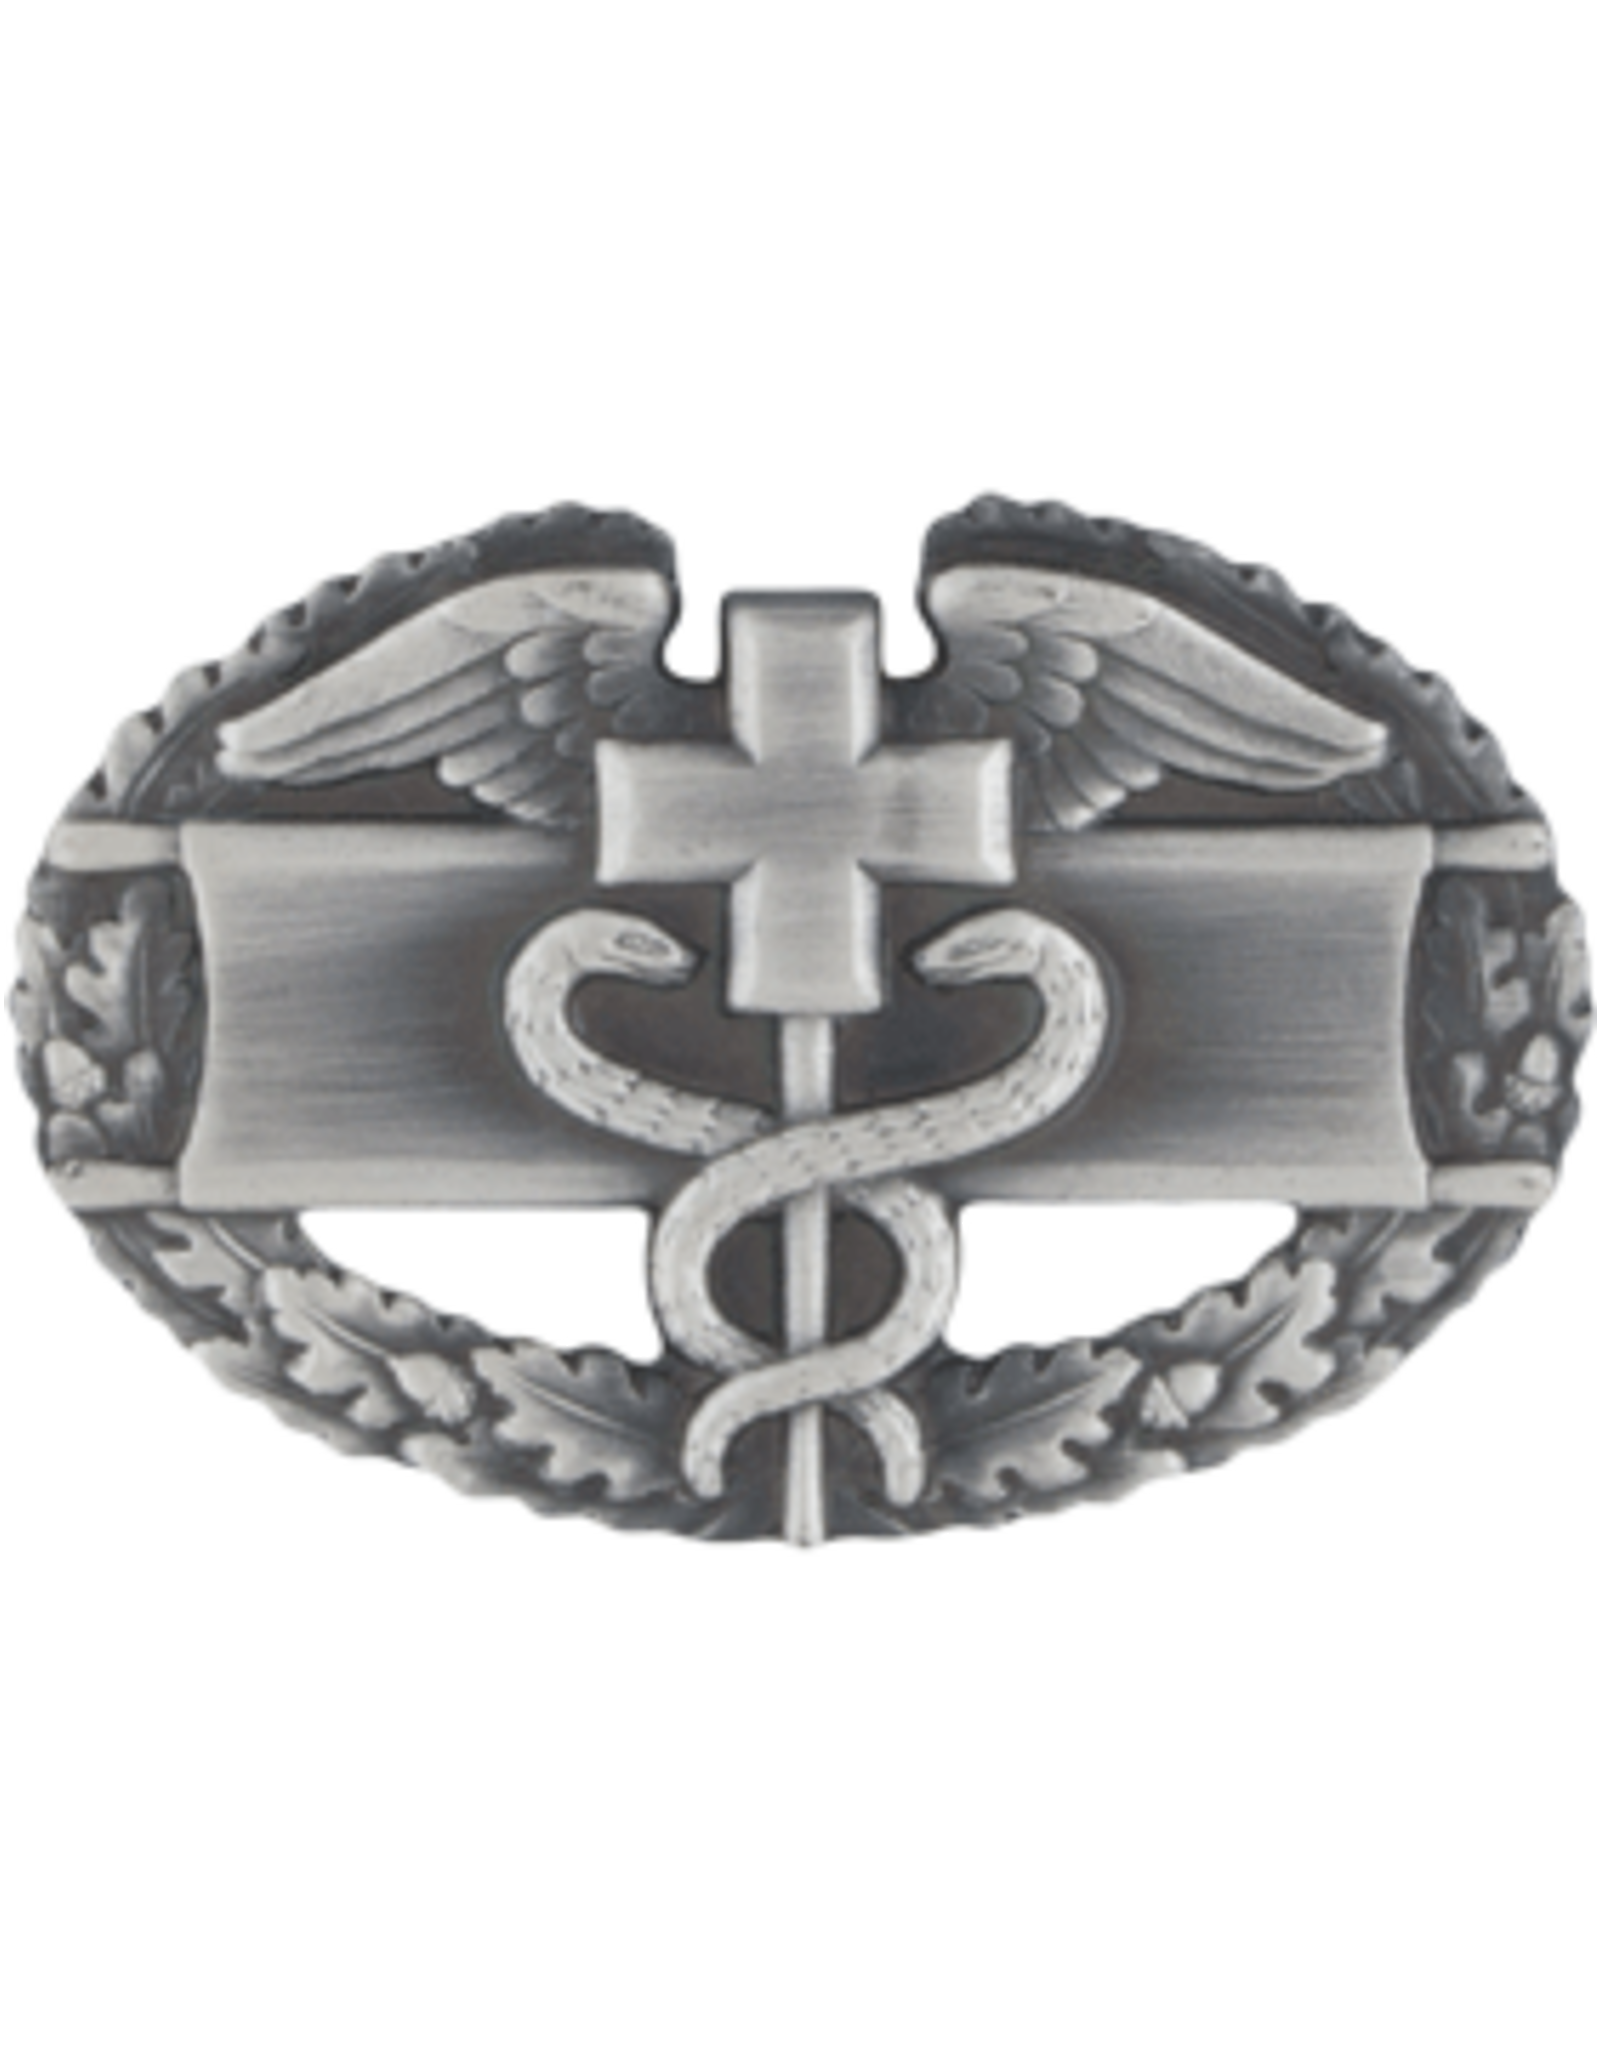 Combat Medical Badge